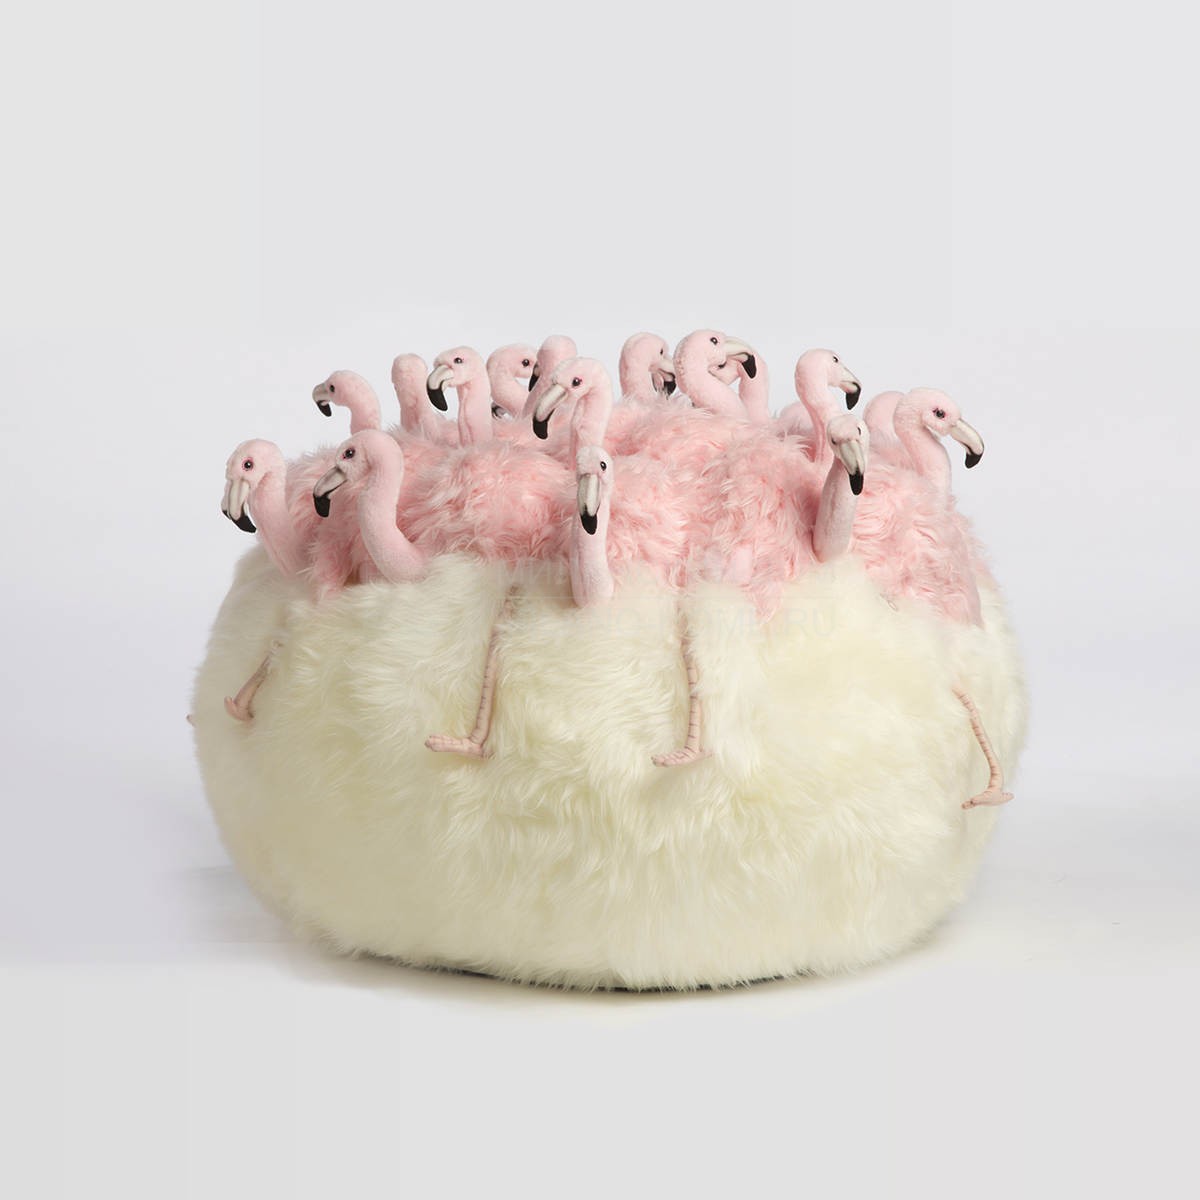 Банкетка или Пуф Flamingo fluffly ball pouf из Бельгии фабрики AP COLLECTION